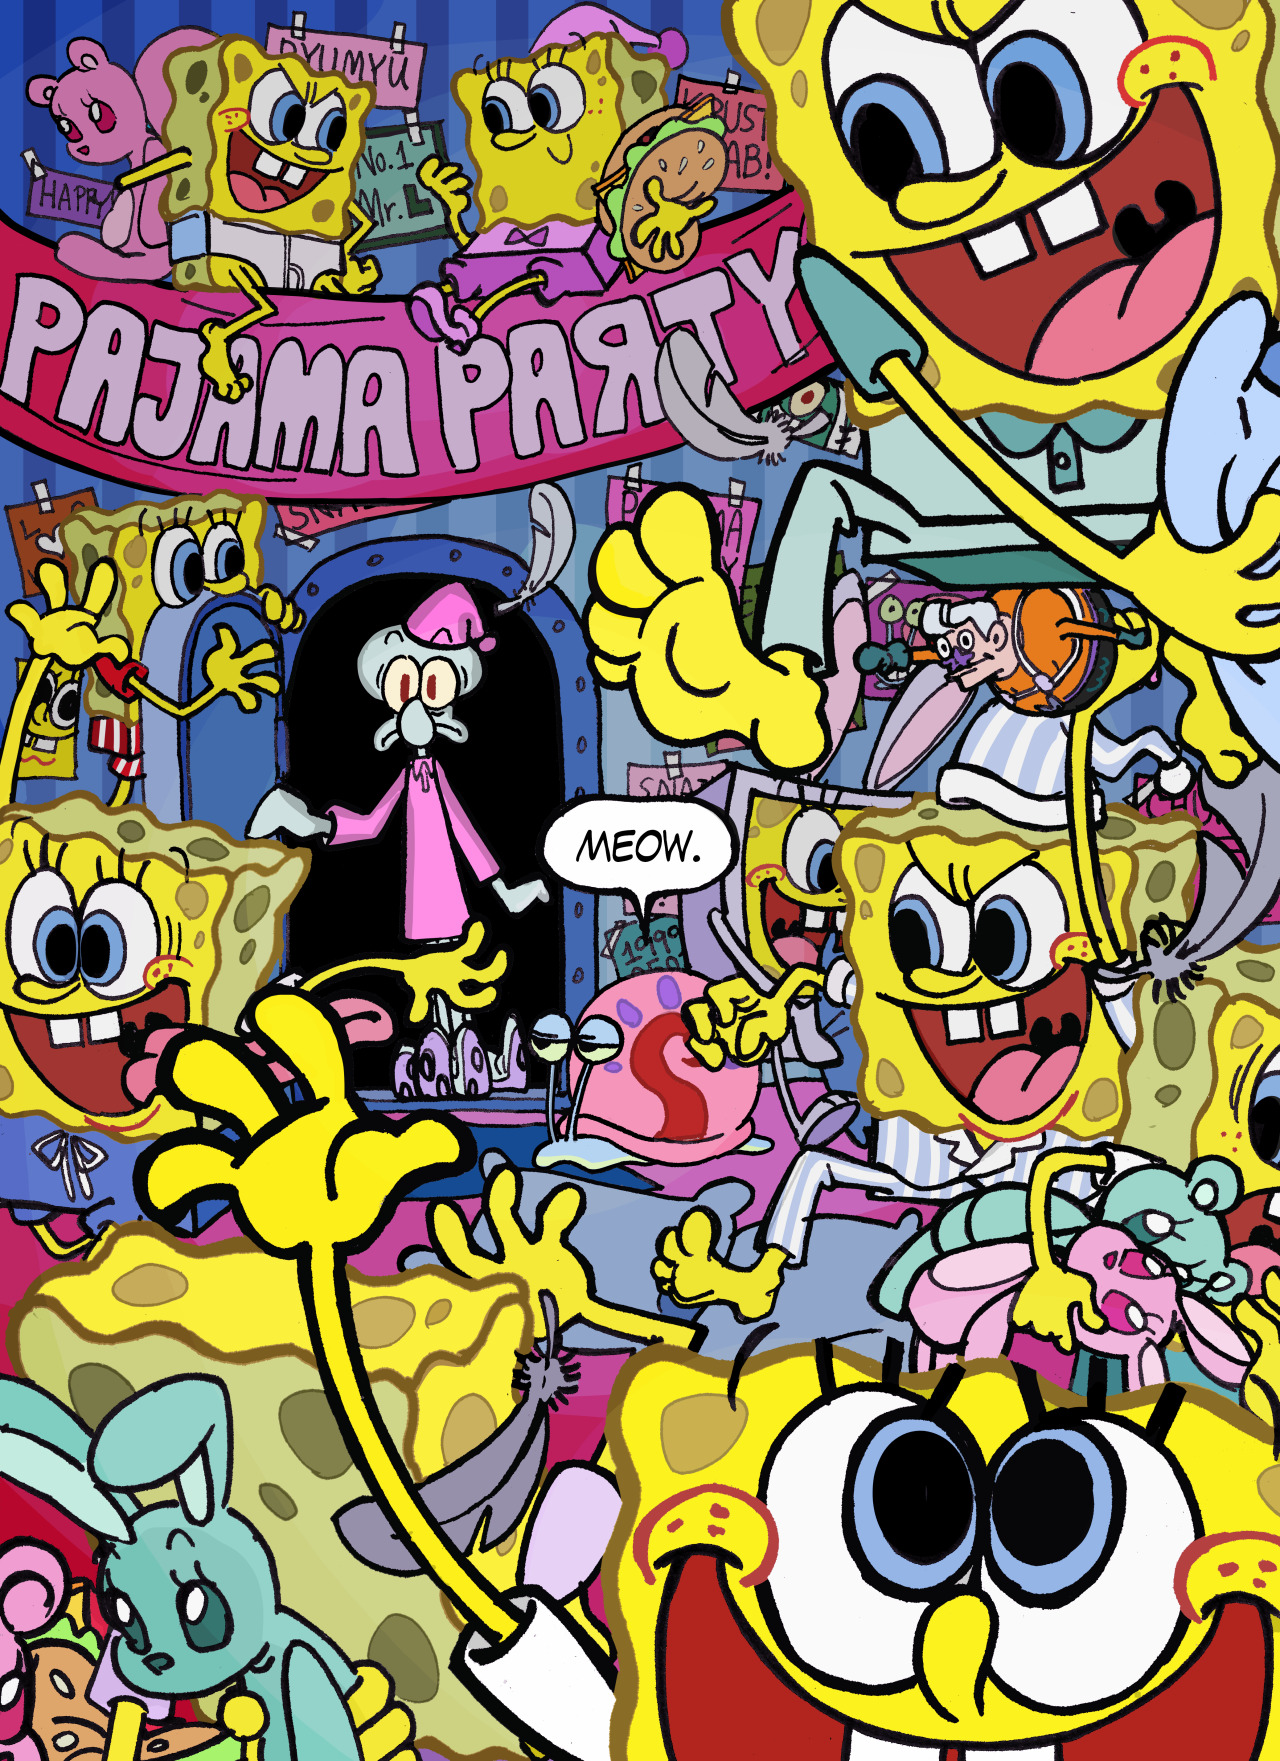 pajama party!! #spongebob#spongebob squarepants#doodle#drawing#art#myart#fanart#cartoon#nickelodeon#squidward